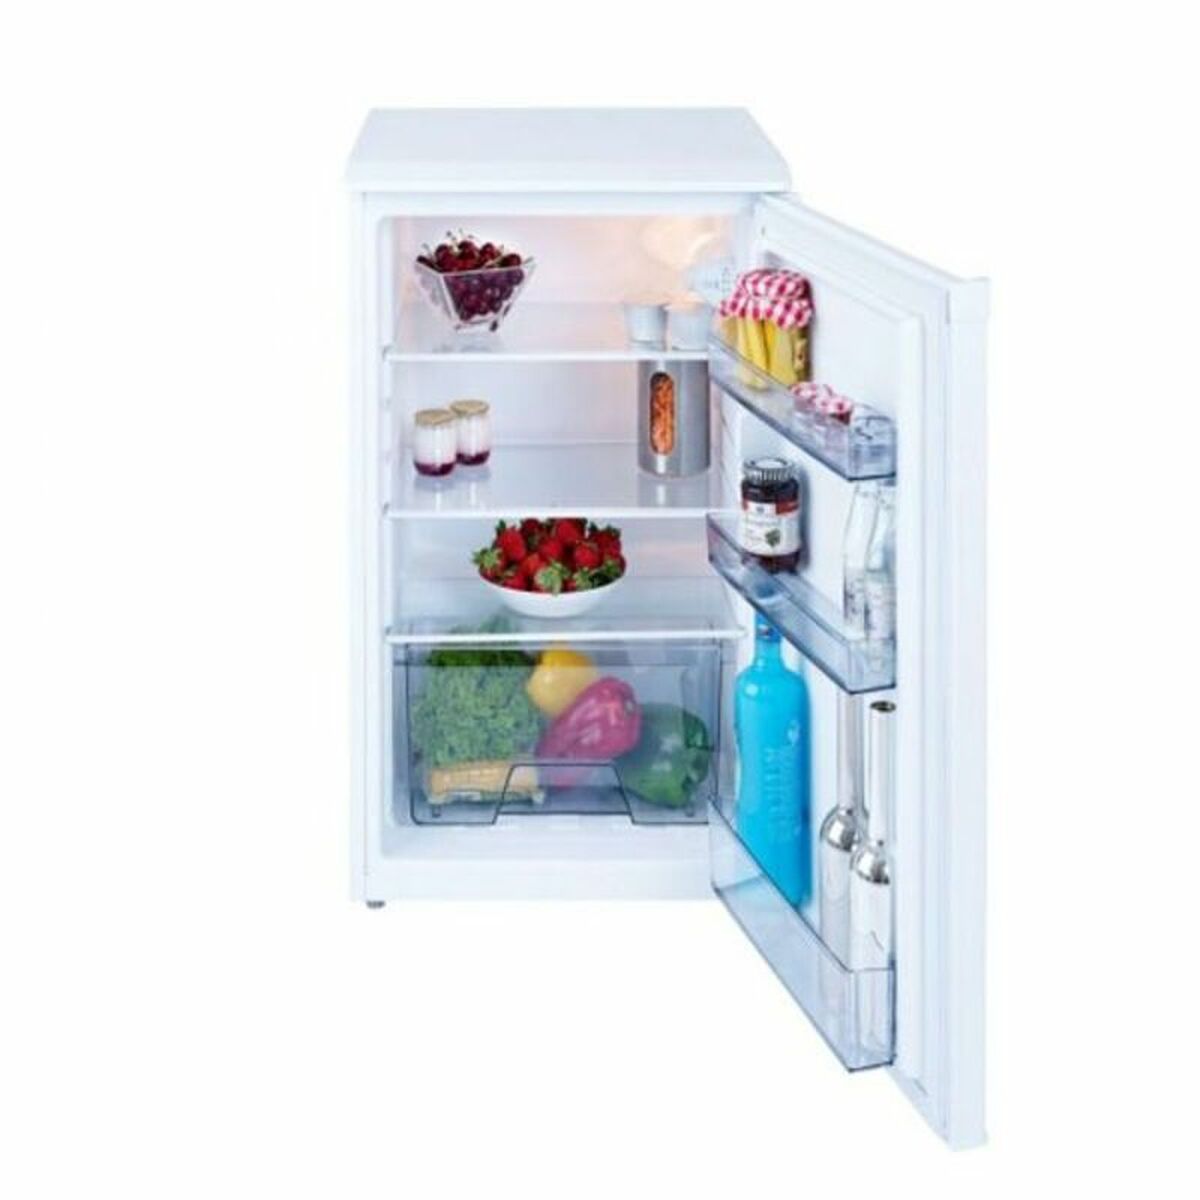 Réfrigérateur Teka 40670310 Blanc Indépendant (85 x 55 cm)